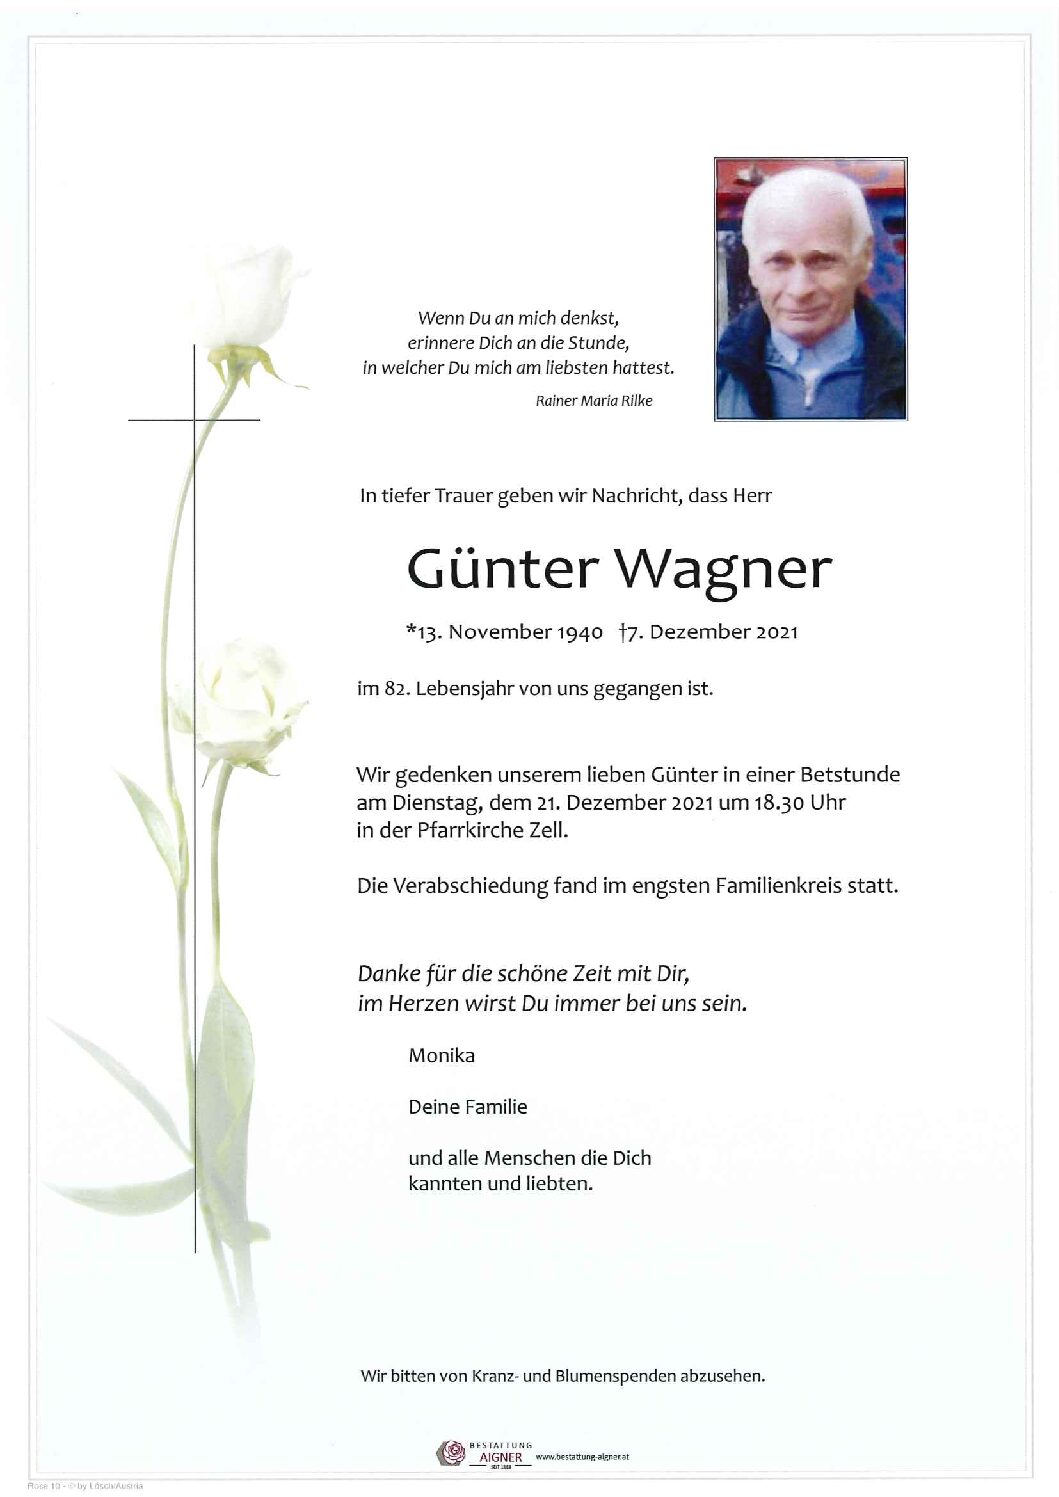 Günter Wagner